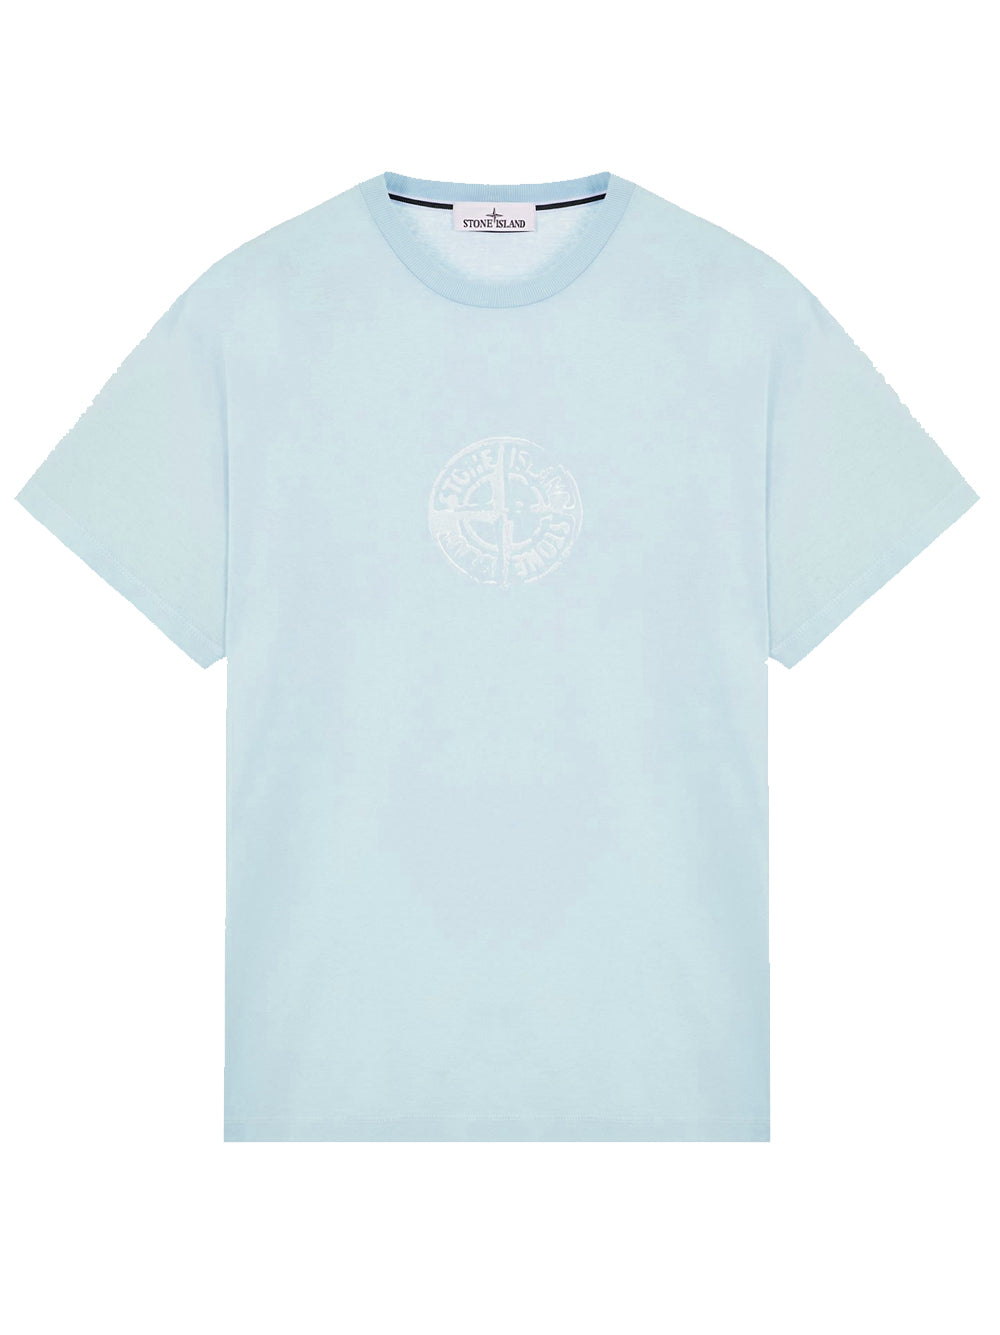 STONE ISLAND - Tee Shirt bleu à logo central